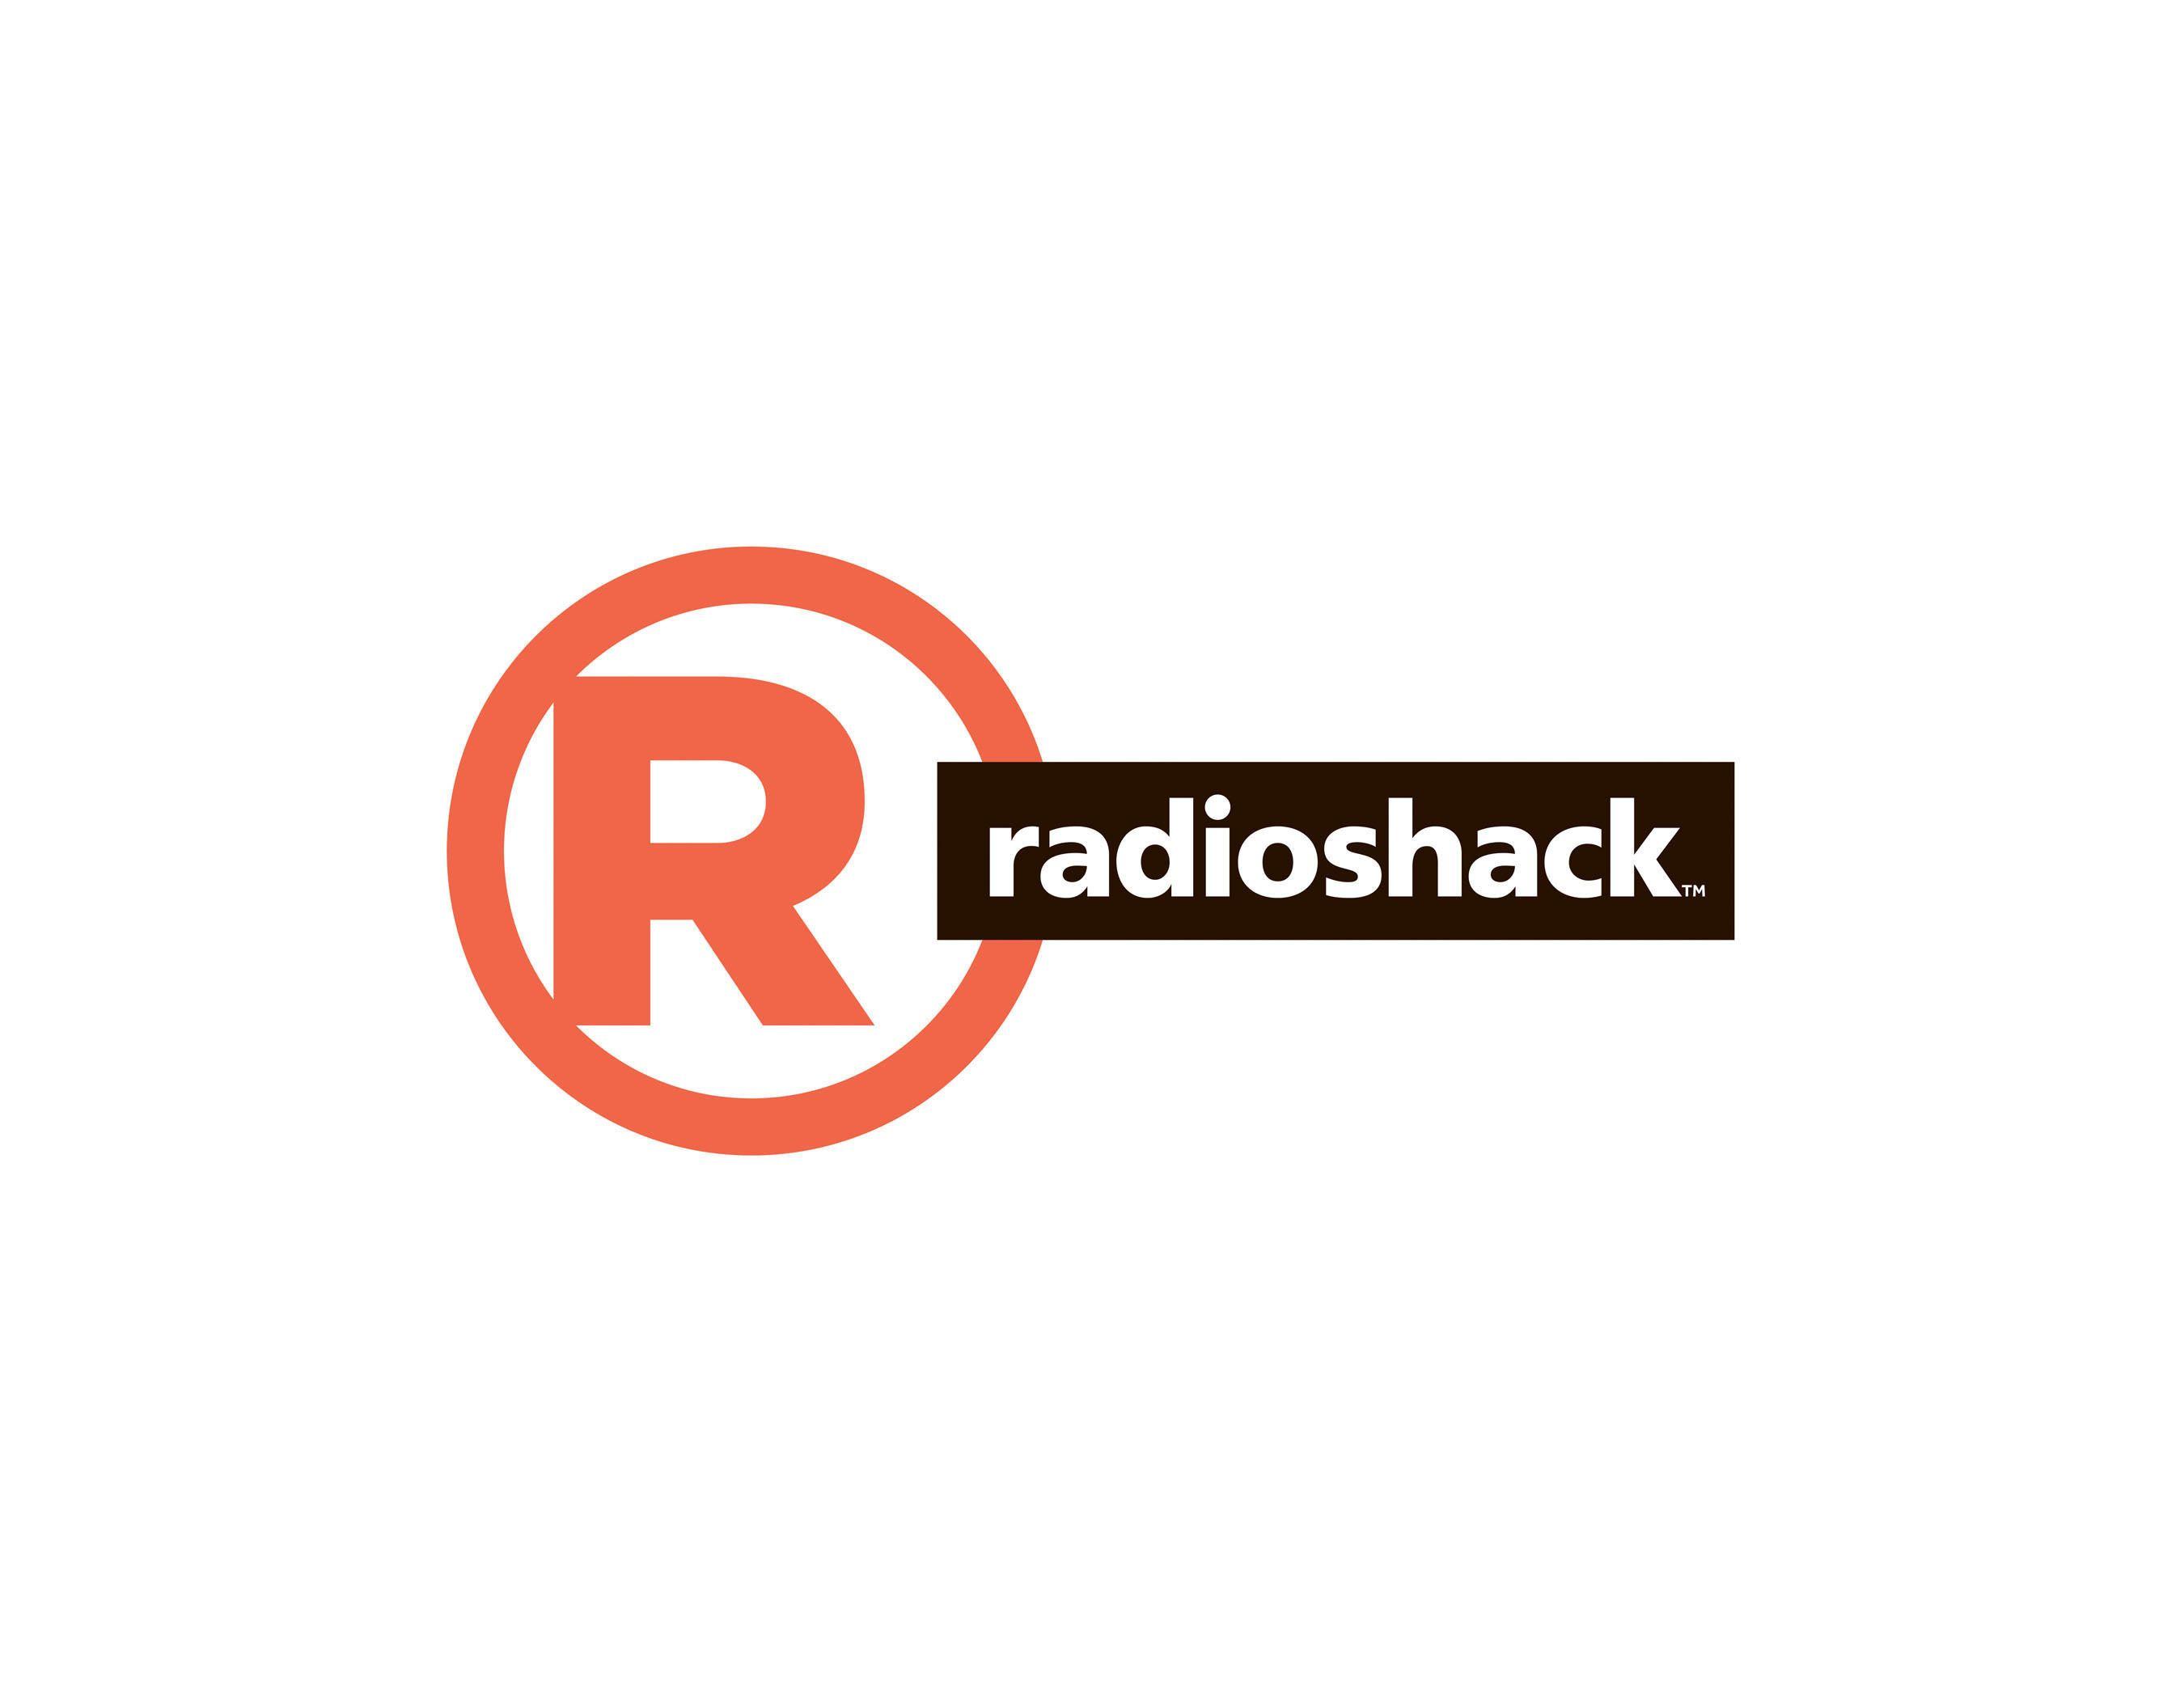 Radio Shack Logo - RadioShack's Fix It Here! Mobile Device Repair Service Now Available ...